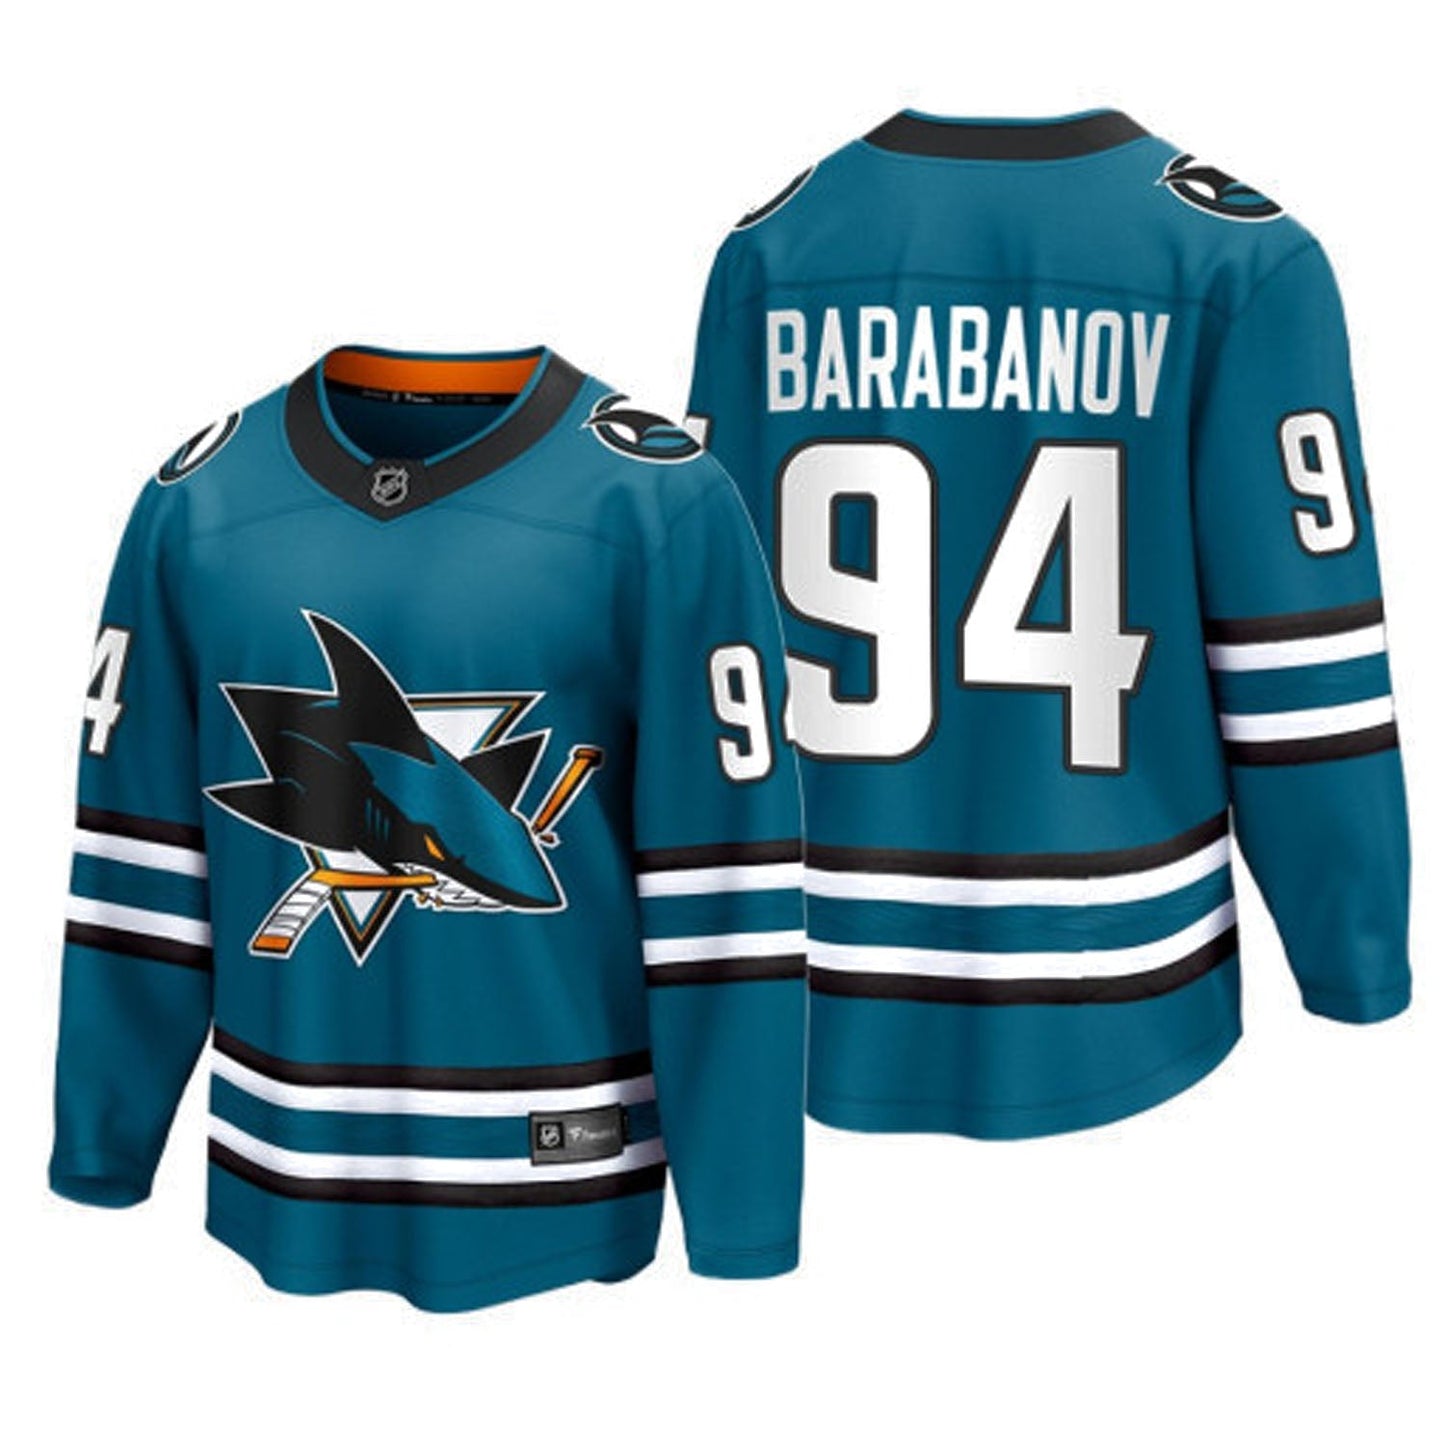 NHL Alexander Barabanov San Jose Sharks 94 Jersey